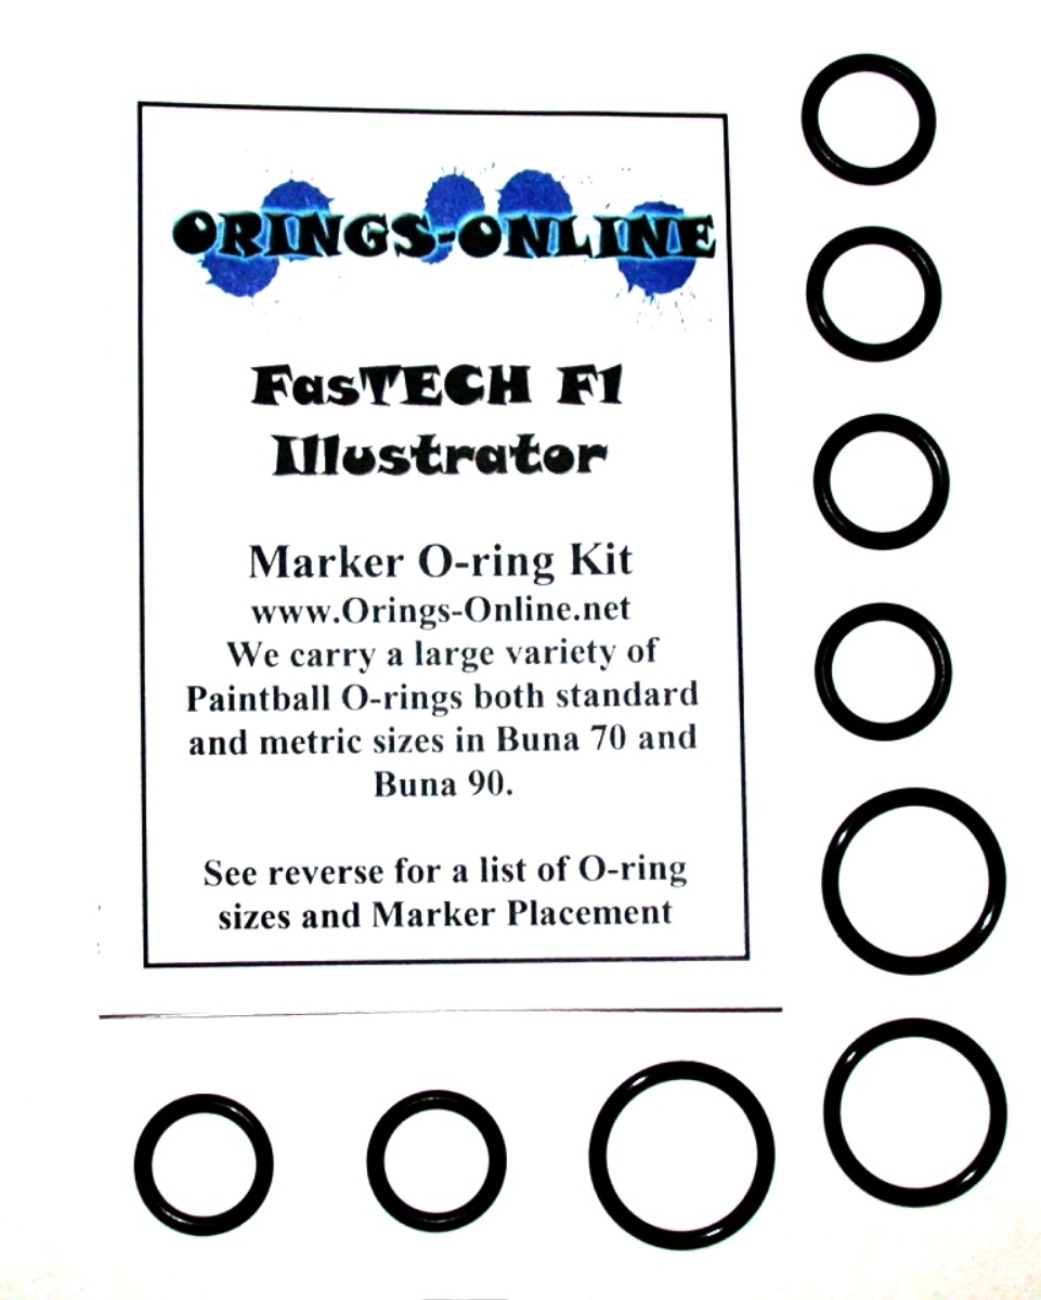 Fastech F1 Illustrator Marker O-ring Kit